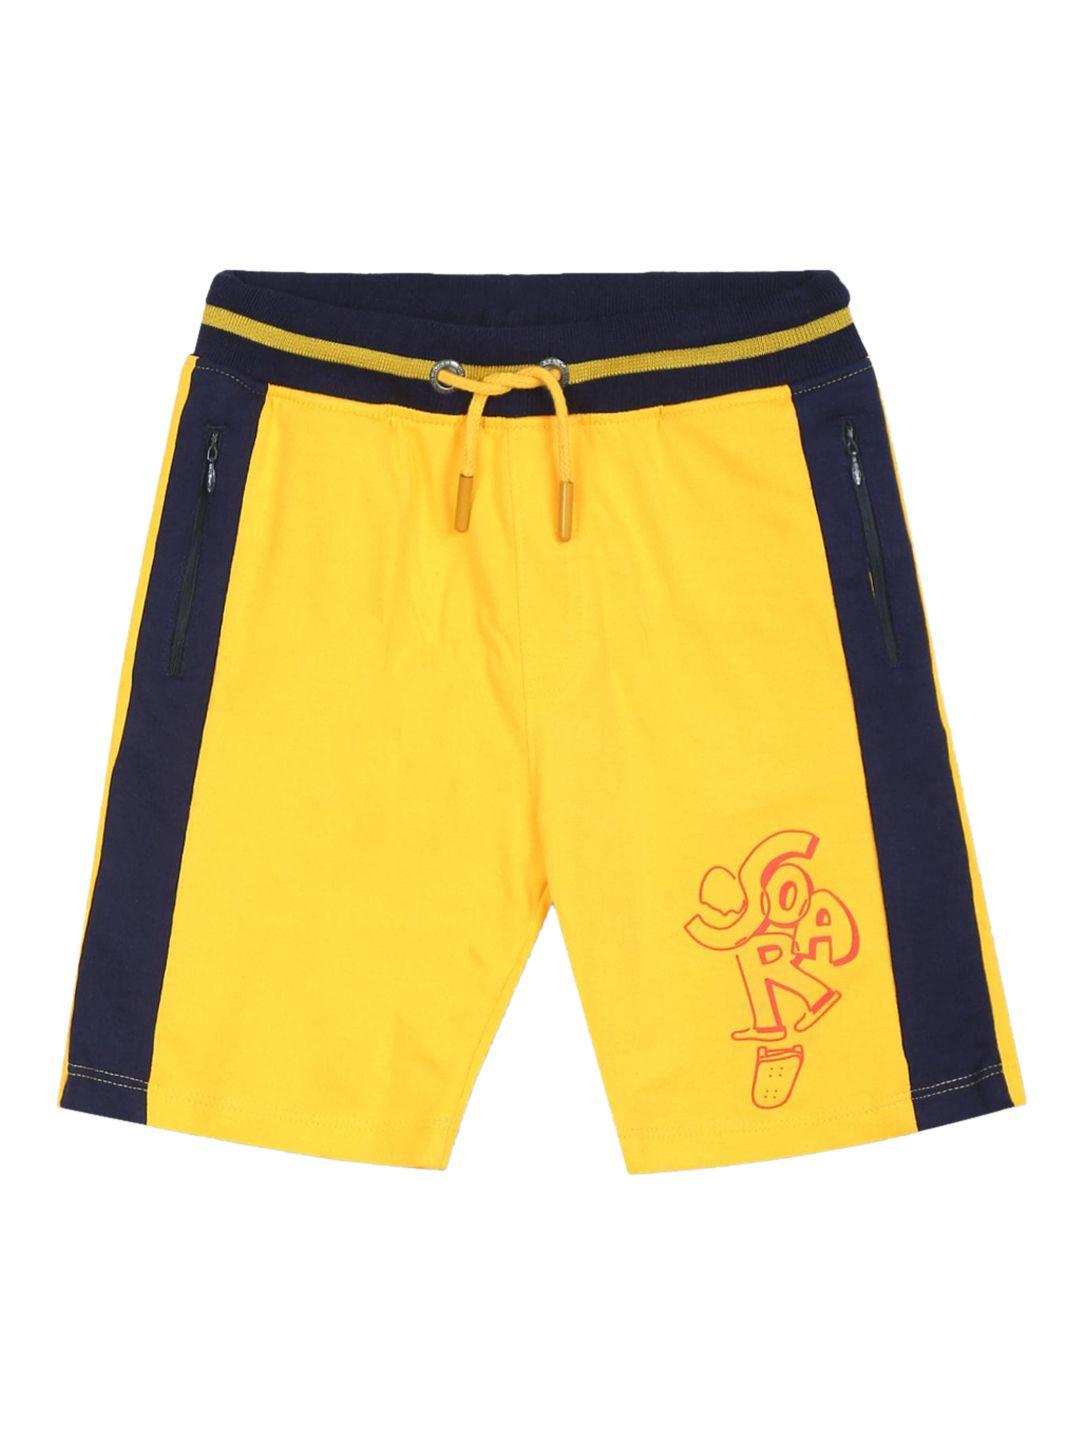 cherokee boys navy blue & yellow solid shorts